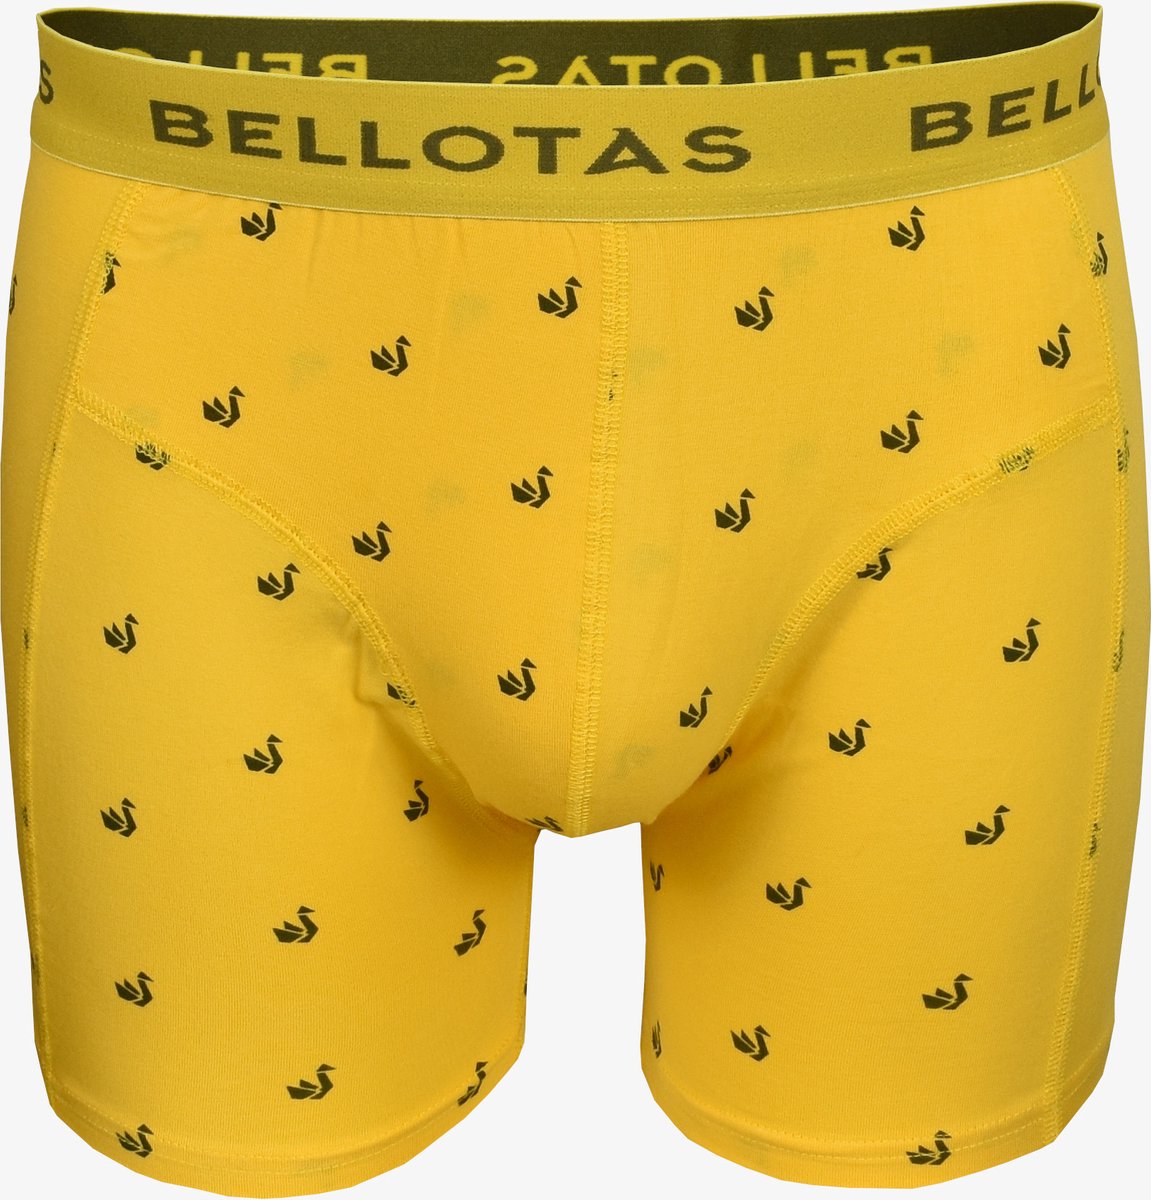 Bellotas - Boxershort - Odile S